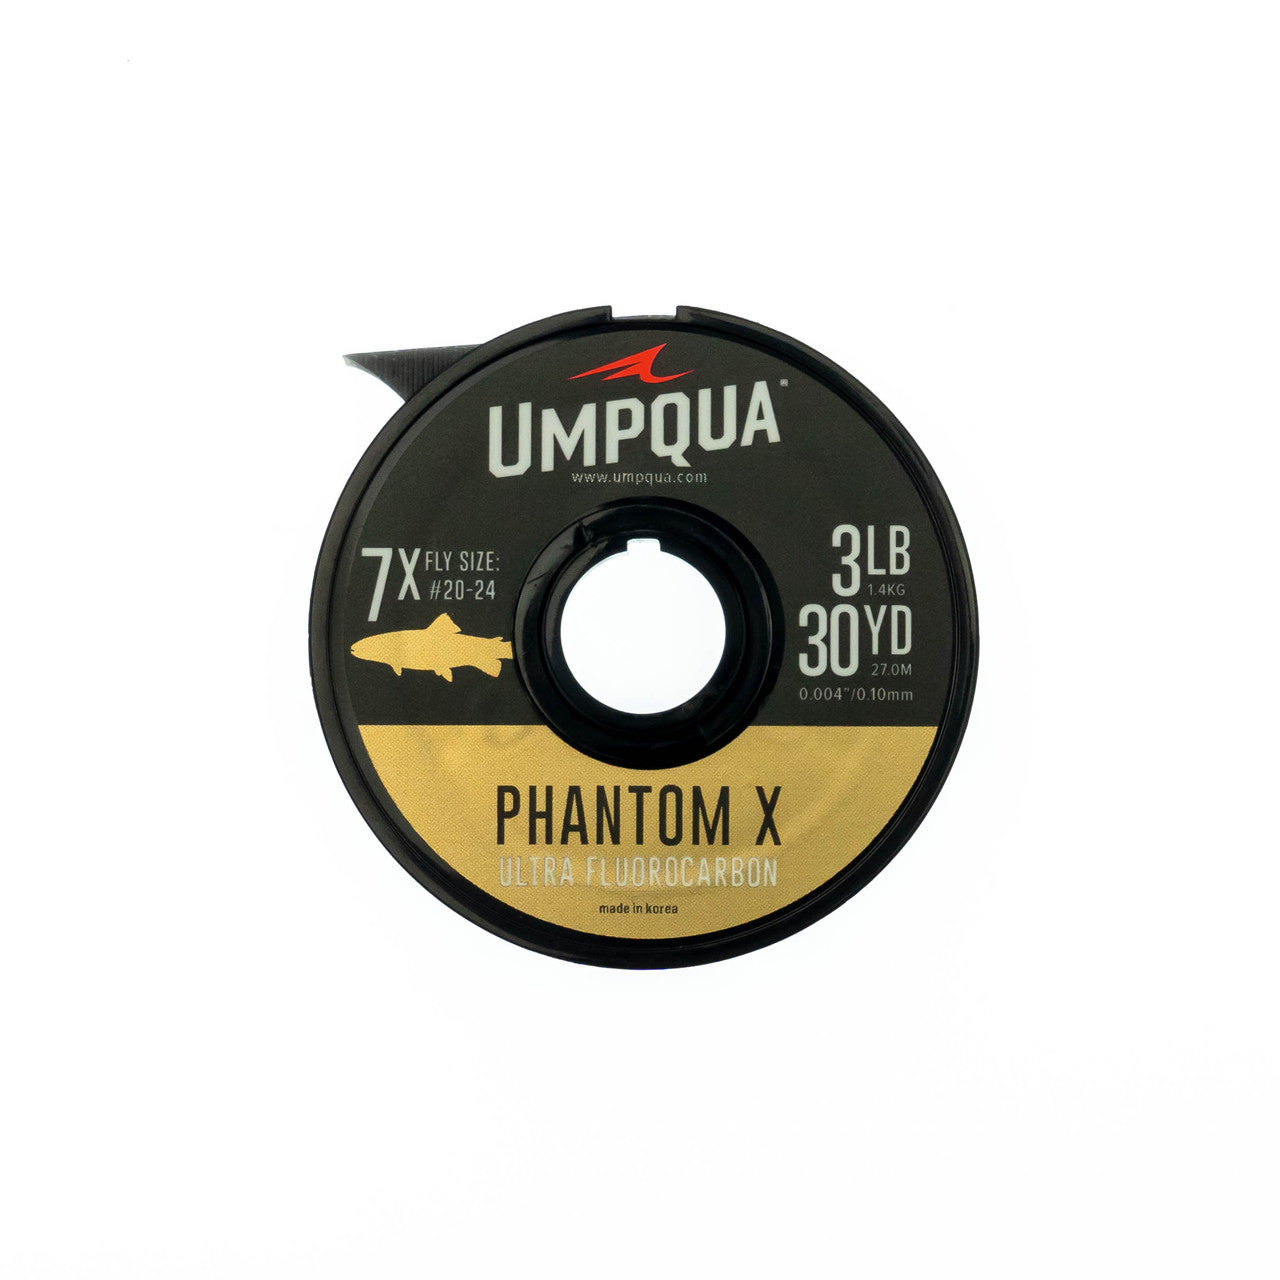 Umpqua Phantom X Fluorocarbon Tippet (30yd spools)